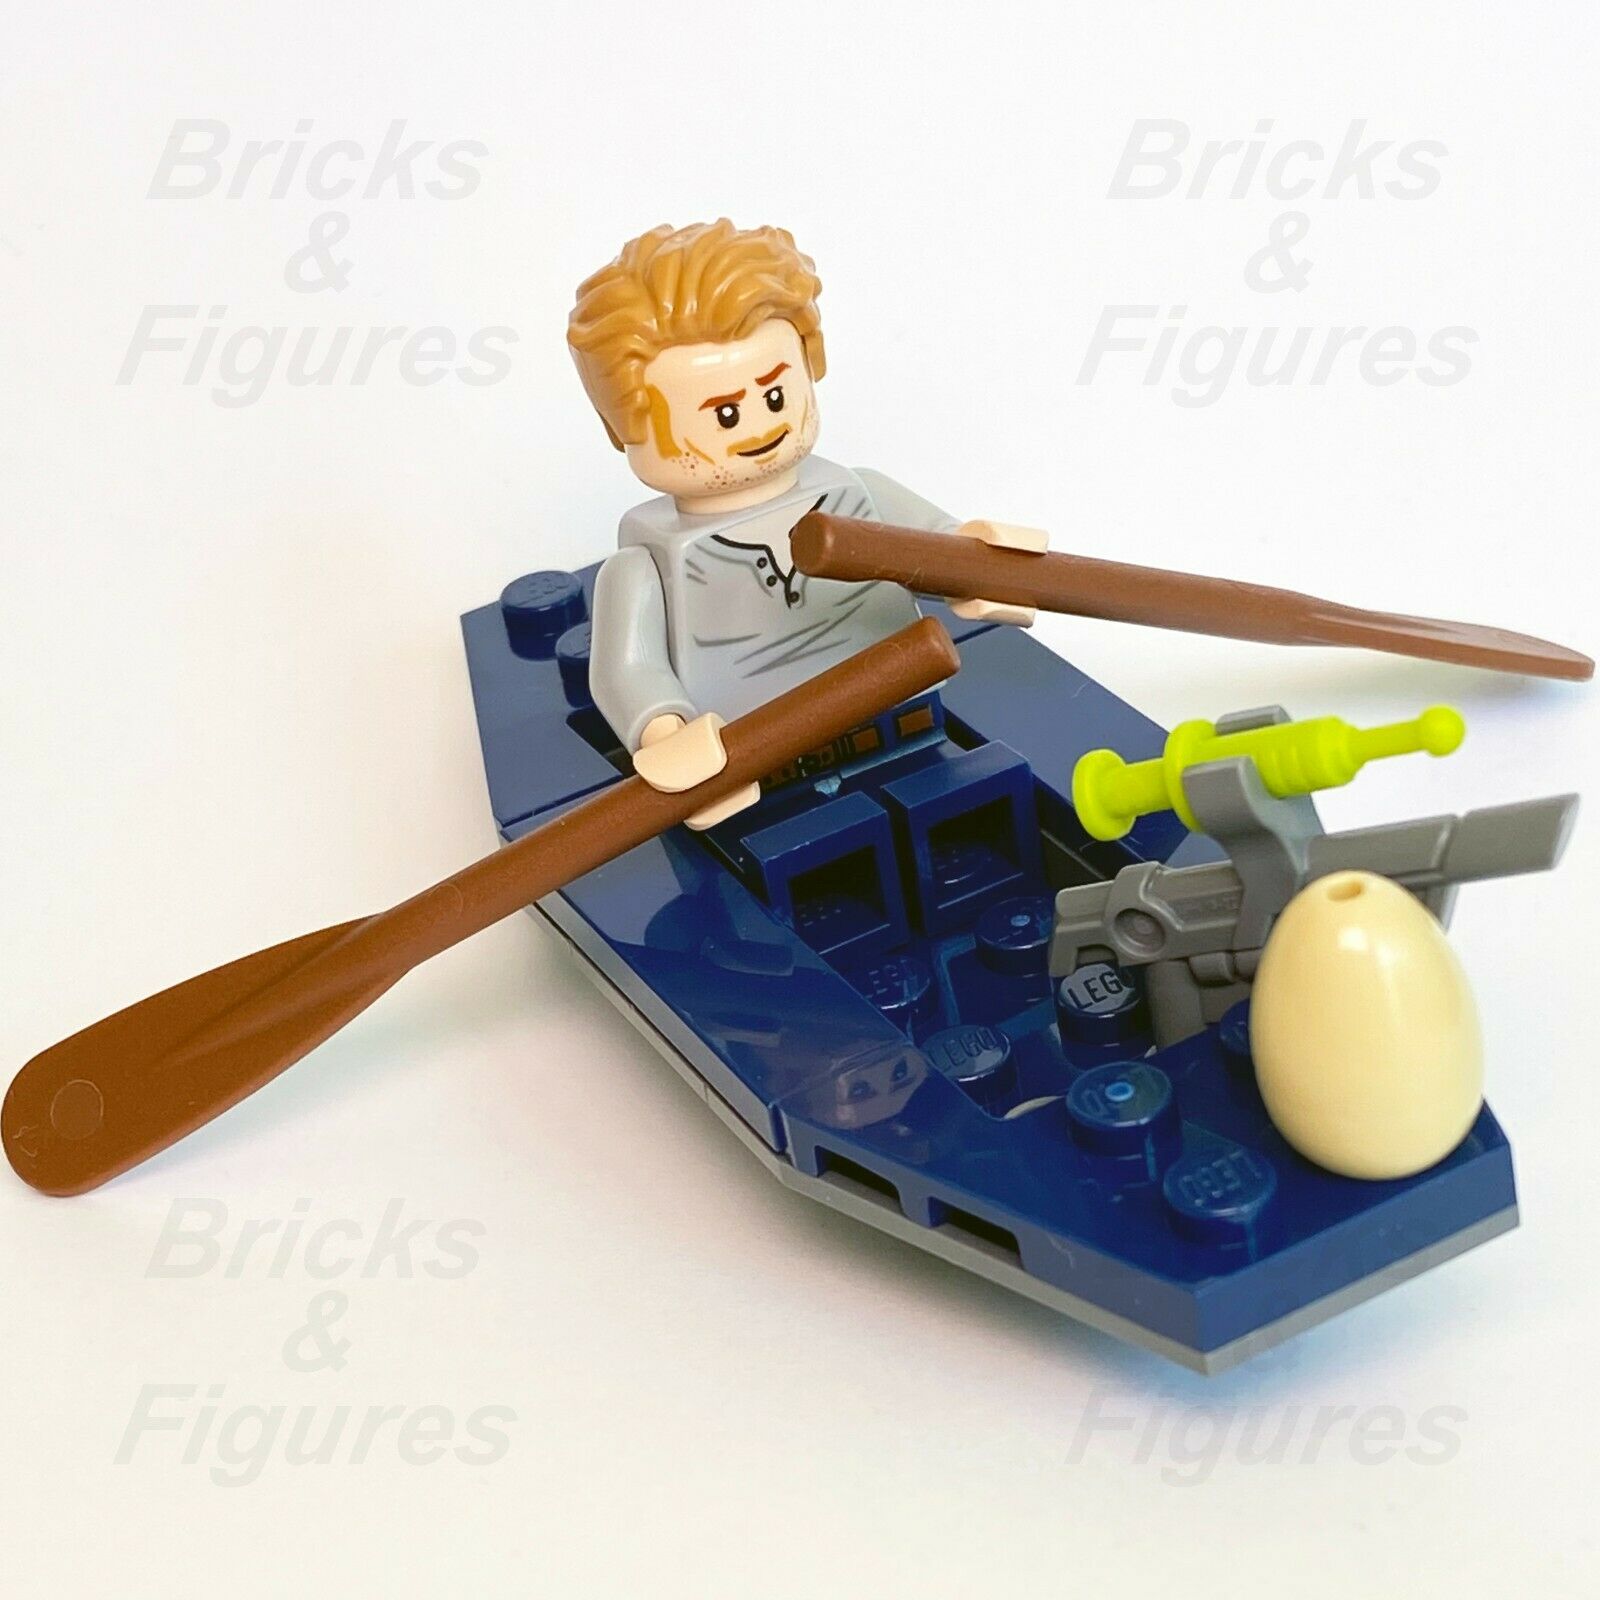 New Jurassic World LEGO Owen Grady with Kayak Foil Pack Set Minifigure 122007 - Bricks & Figures